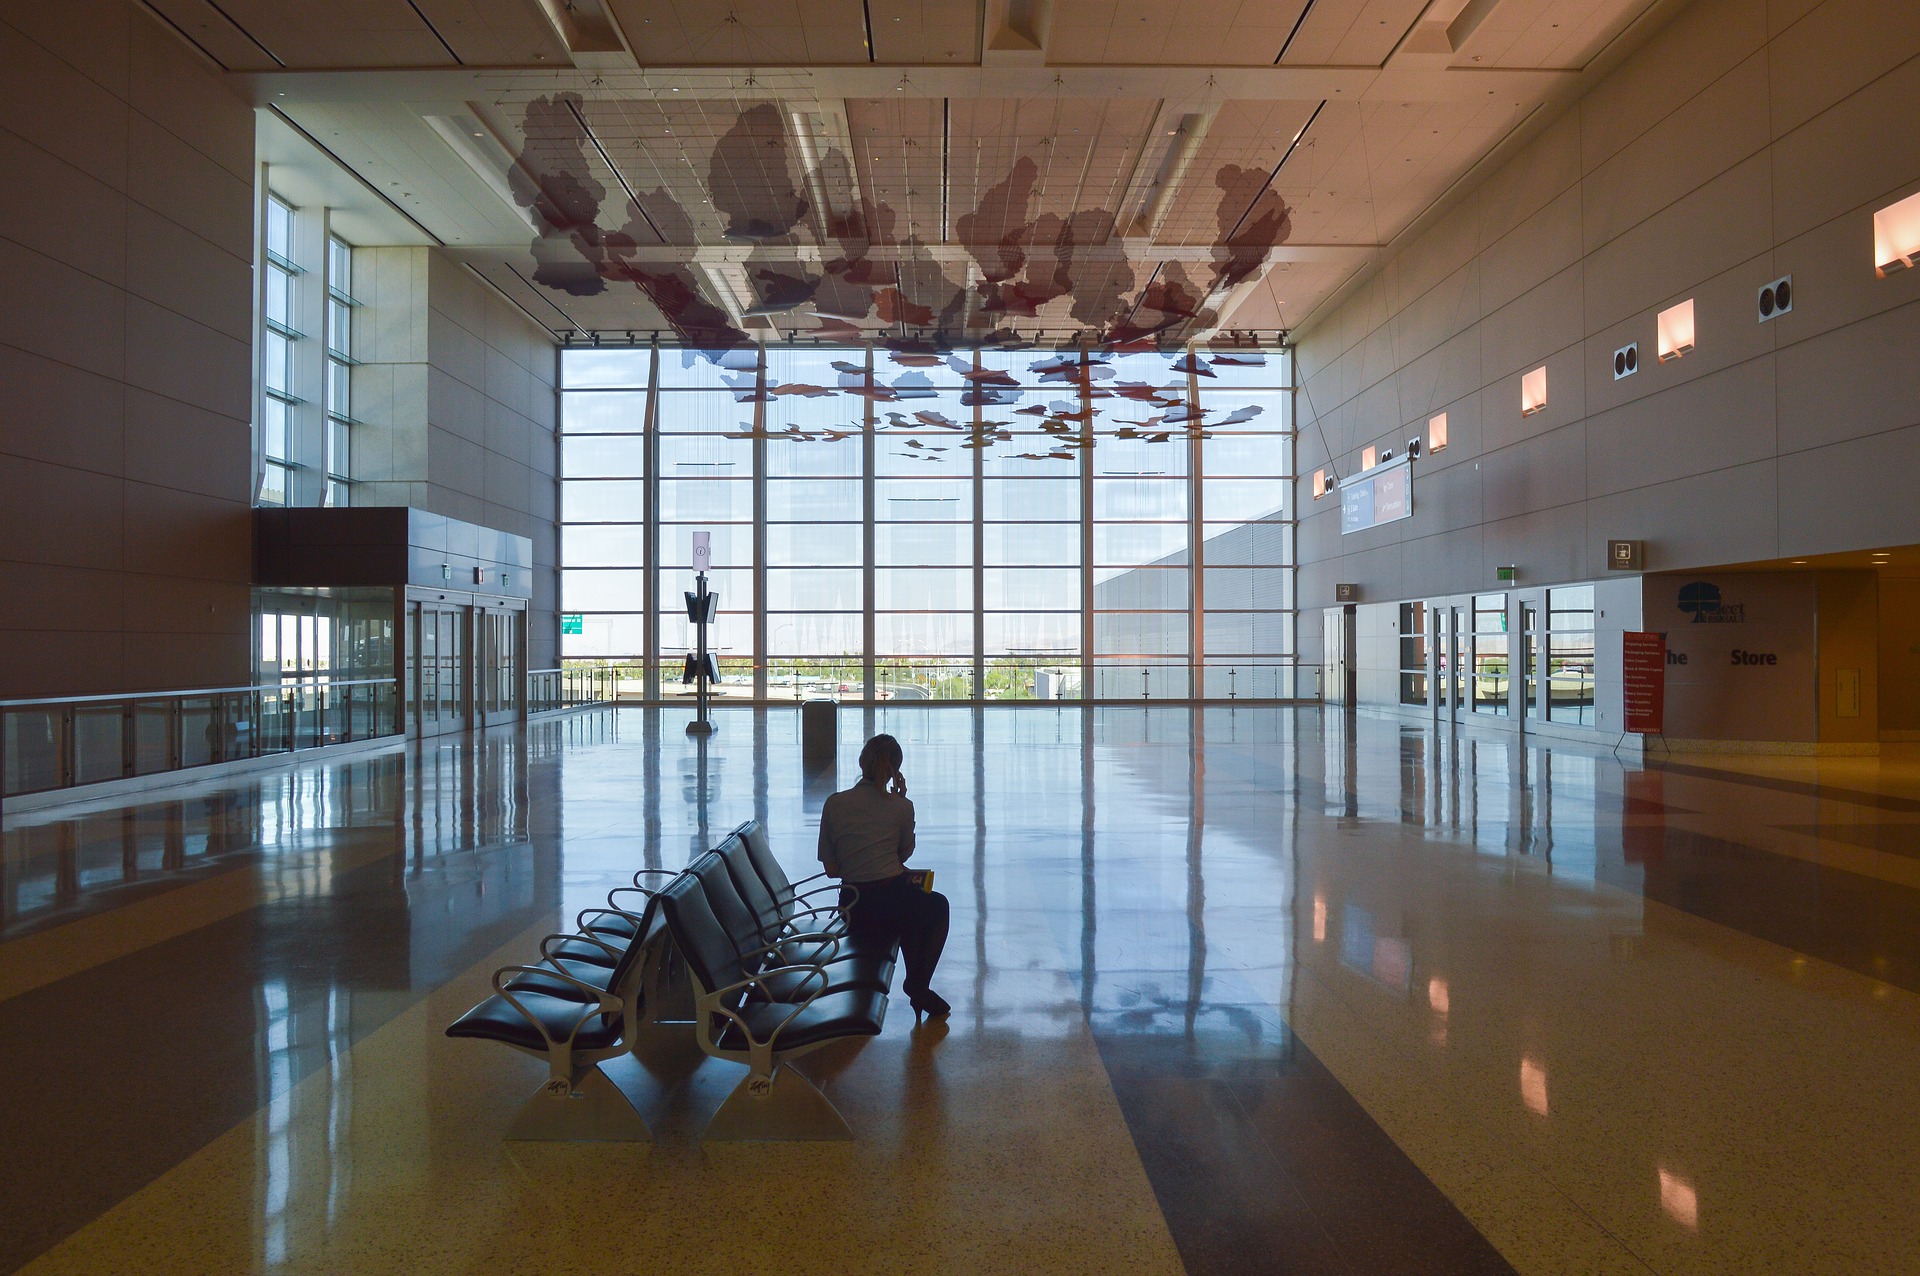 Waiting hall. Холл аэропорта. Большие окна аэропорт. Вестибюль аэропорта. Аэропорт зал ожидания.